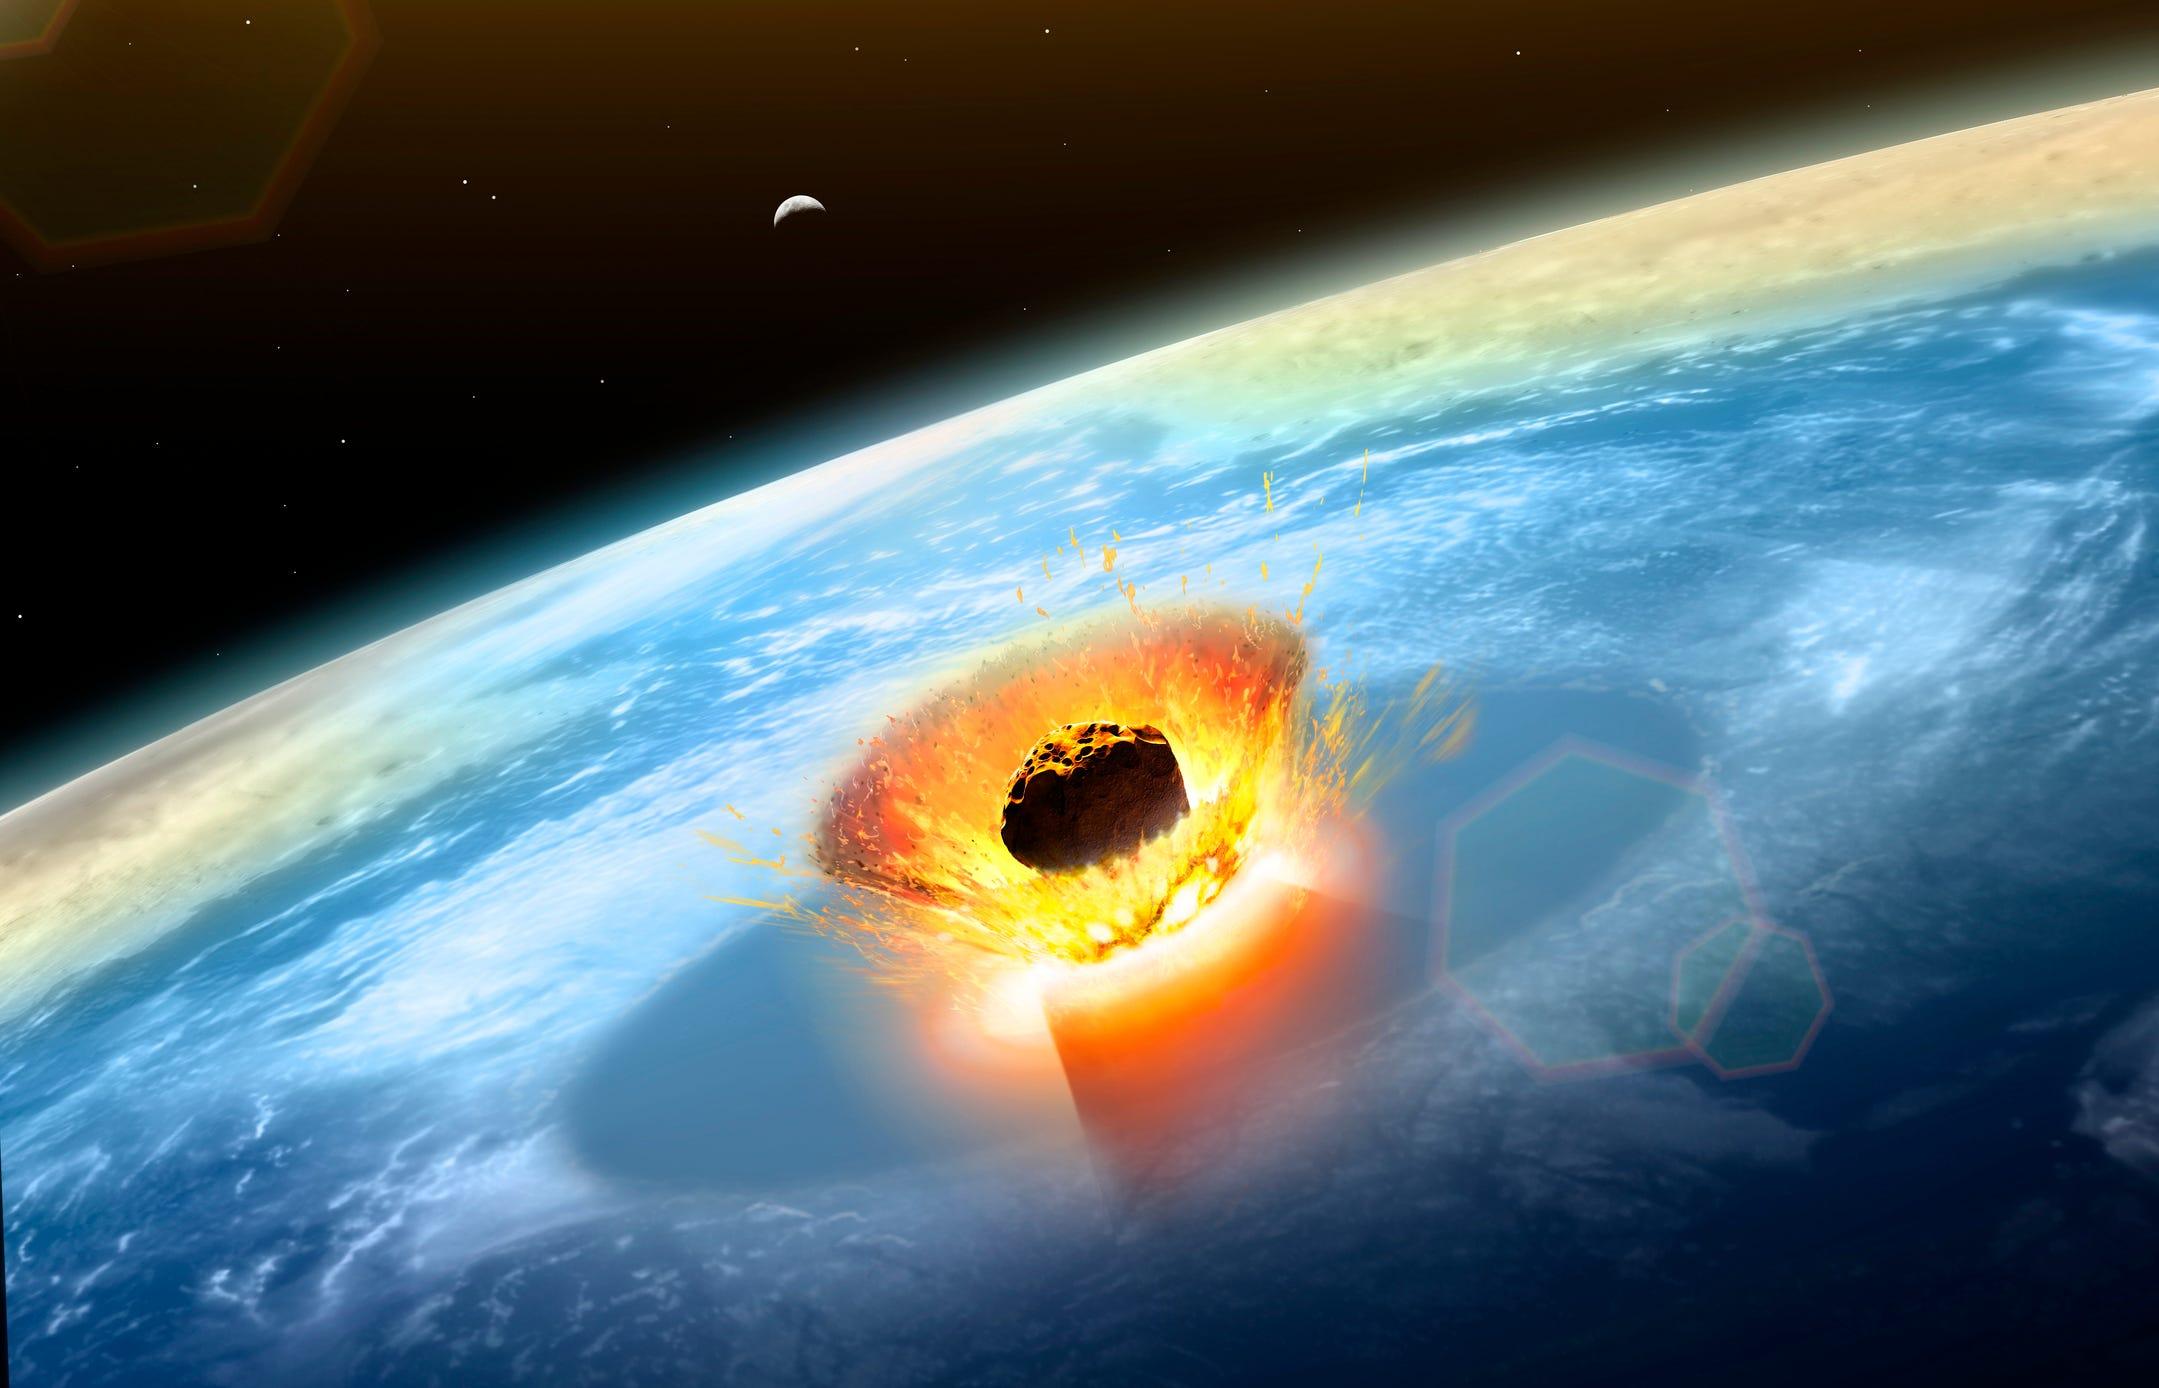 NASAは小惑星の衝突が迫った場合に警告する手順を決めている | Business Insider Japan